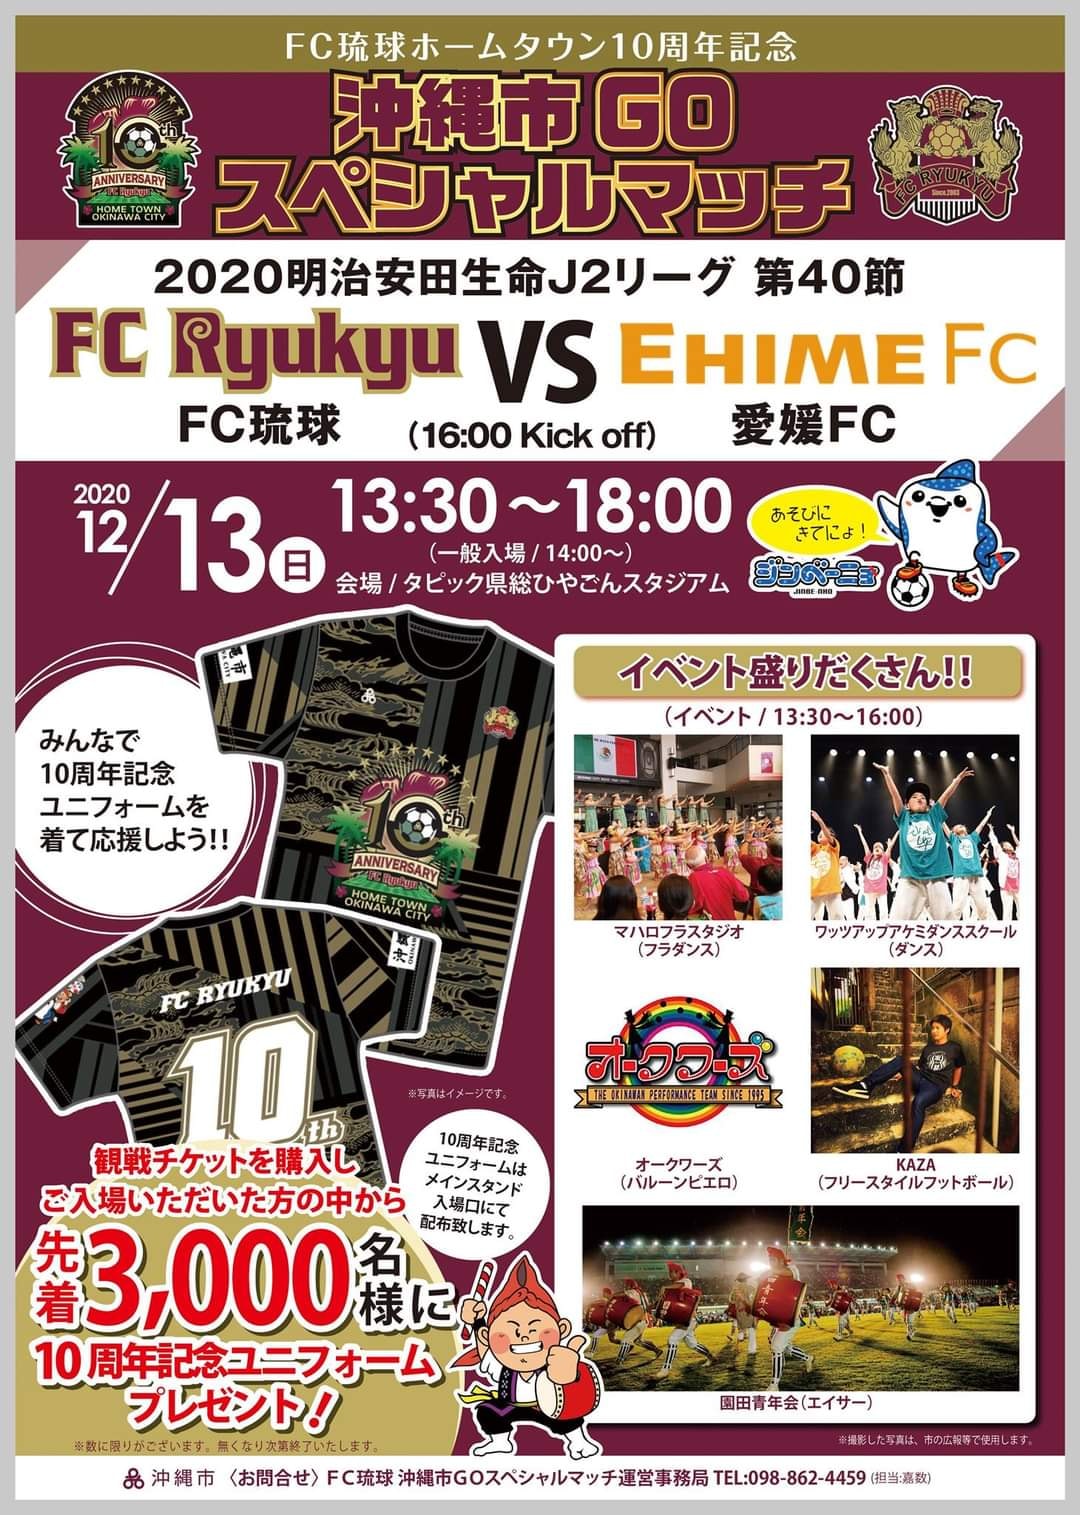 🎌Japan🎌 FC Ryukyu Black Gold Okinawa 10th Anniversary Venue Limited Not for Sale 3000 pieces Okinawa FC Ryukyu Shouri Castle Okinawa City